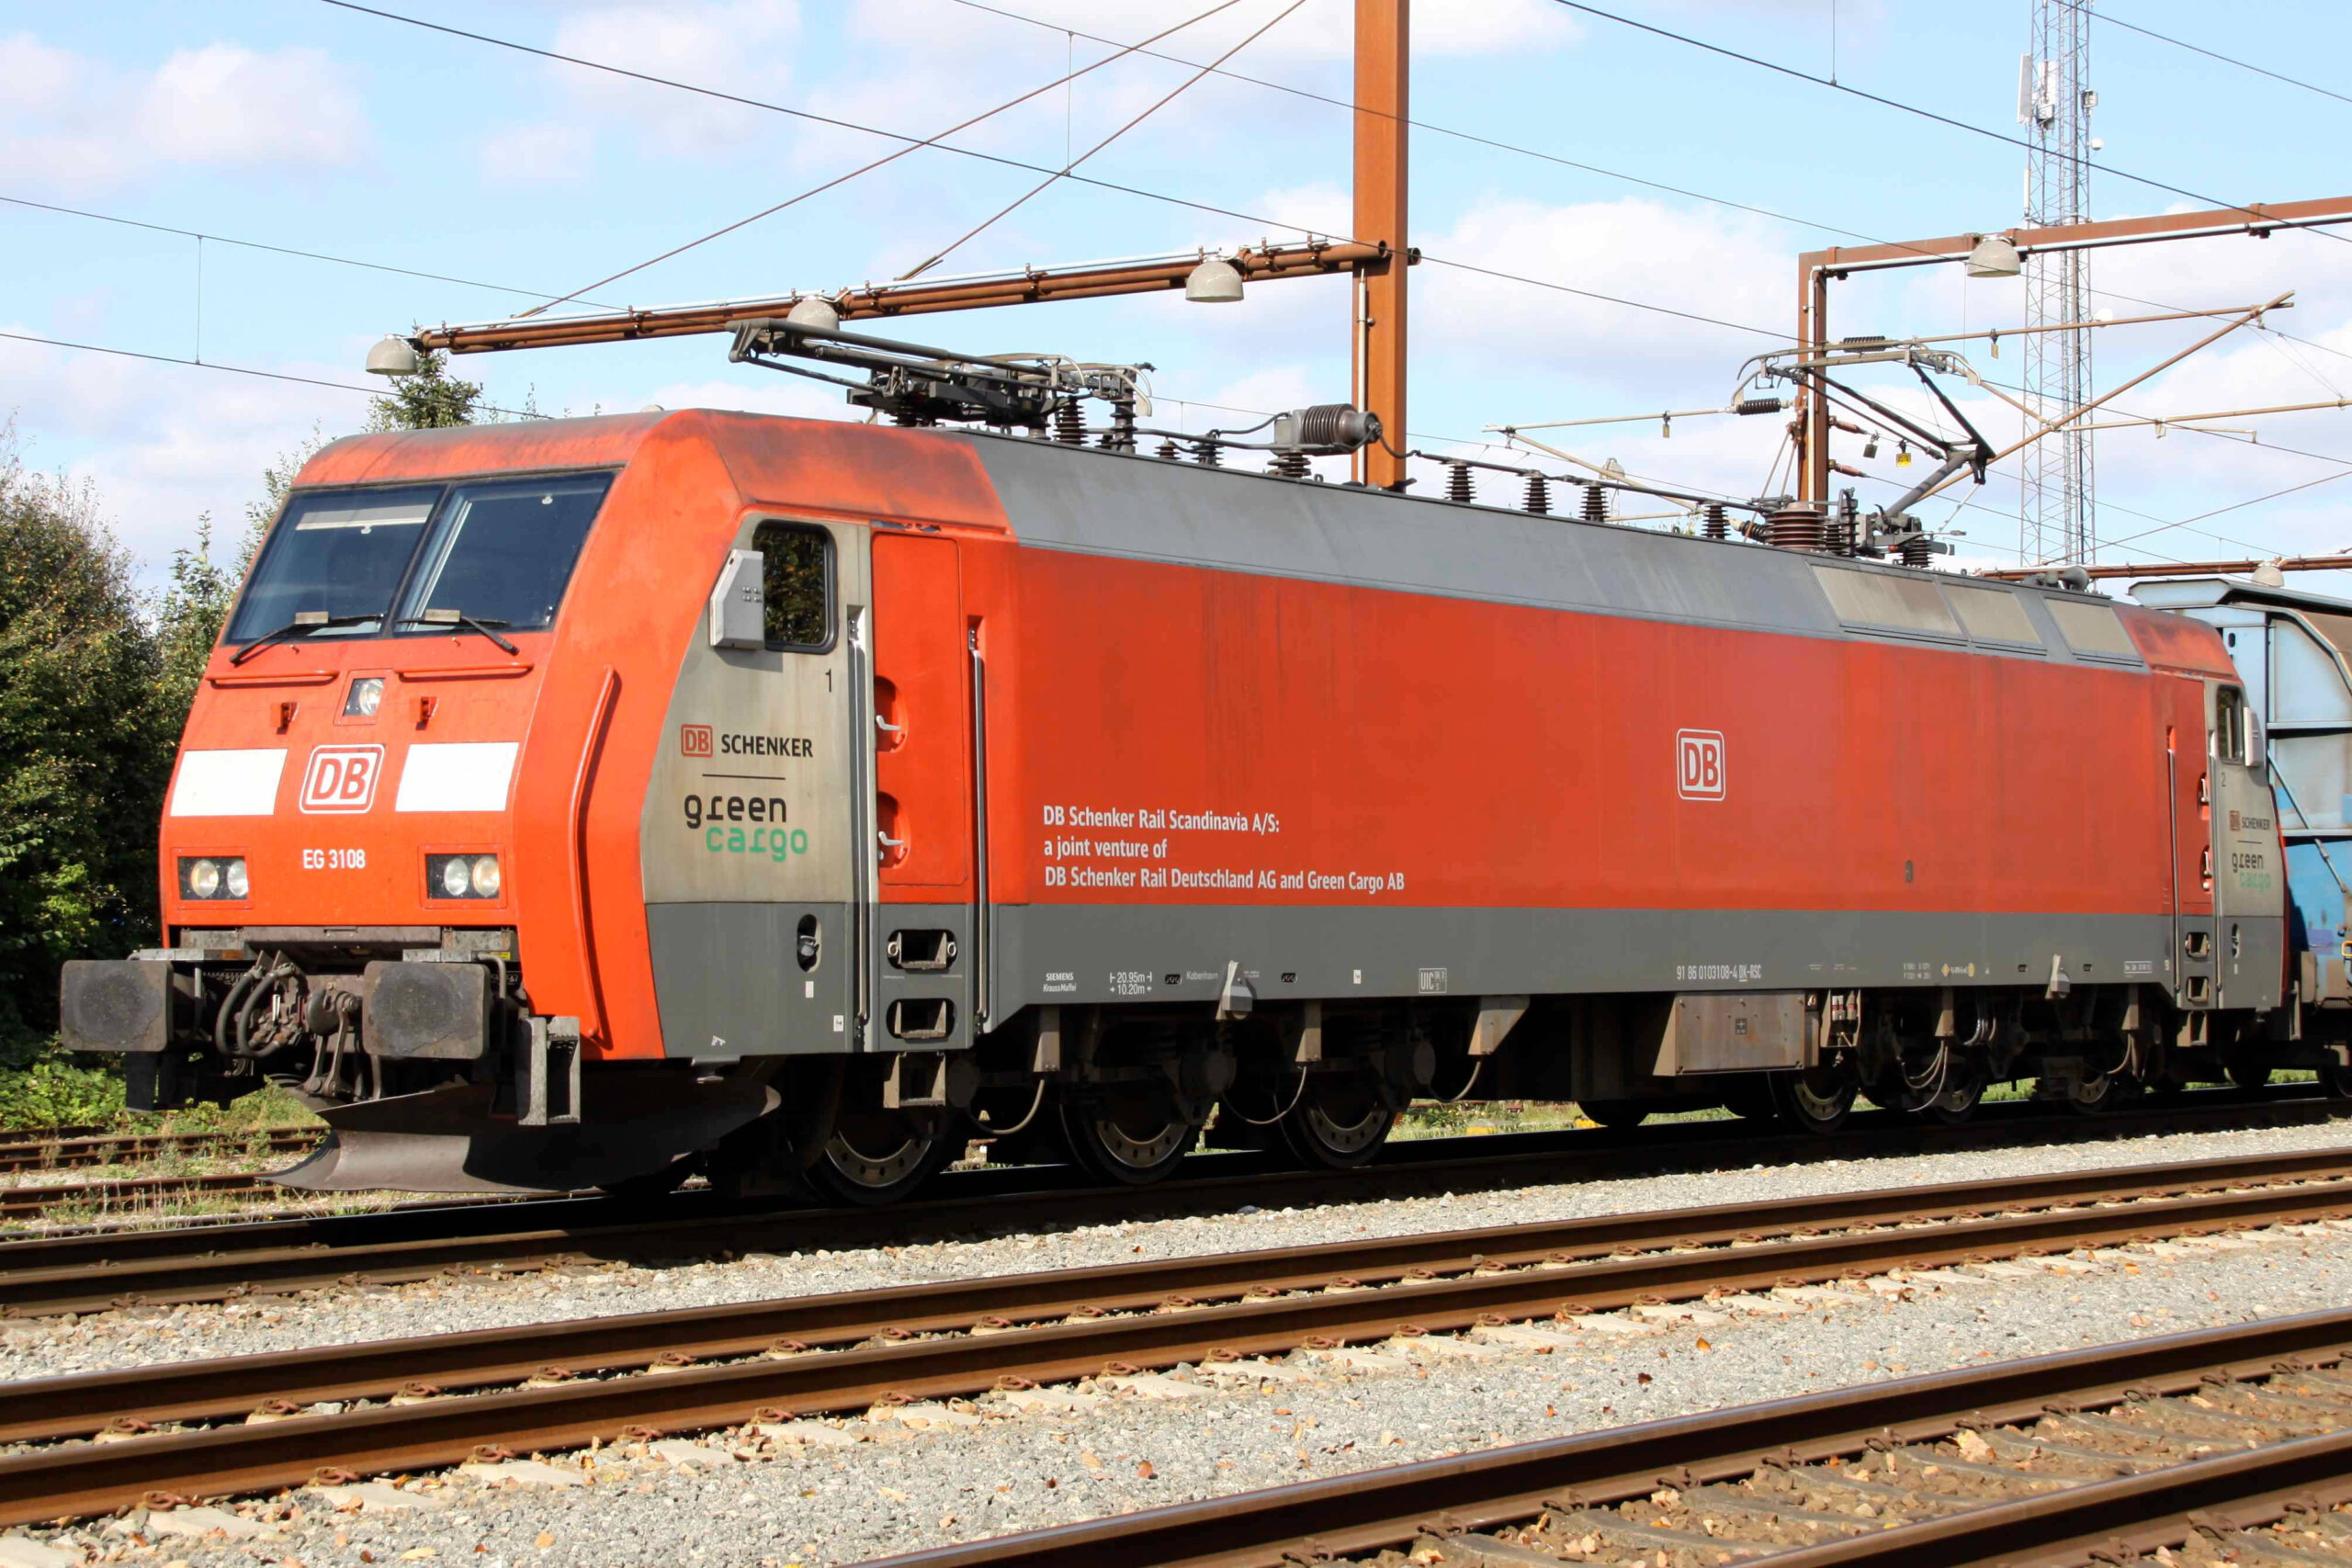 One of the locomotives to undergo the ETCS upgrade